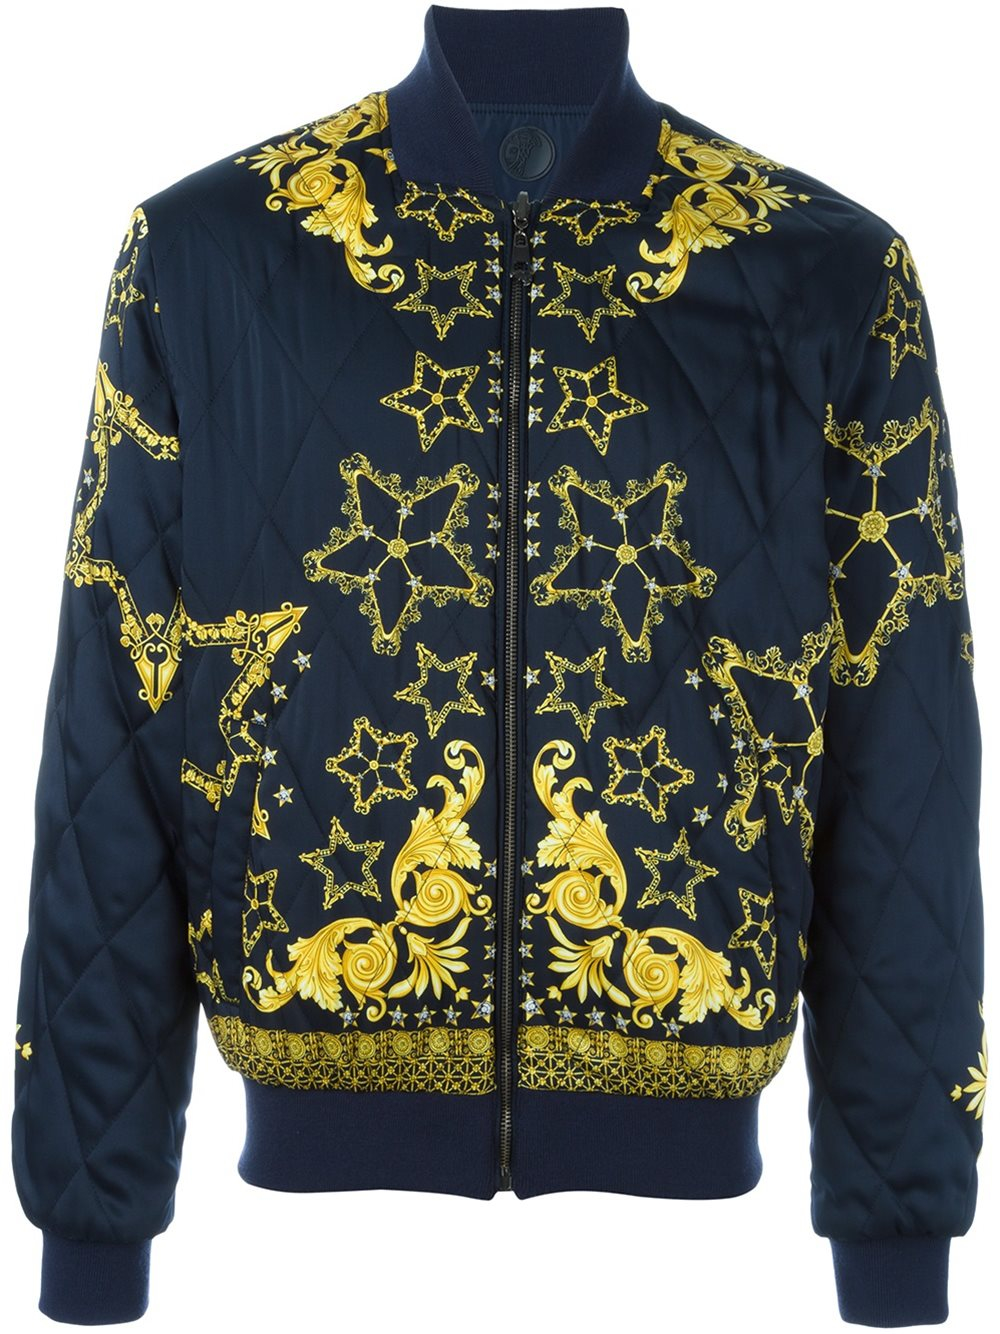 Versace Baroque Star Bomber Jacket in Blue for Men - Lyst